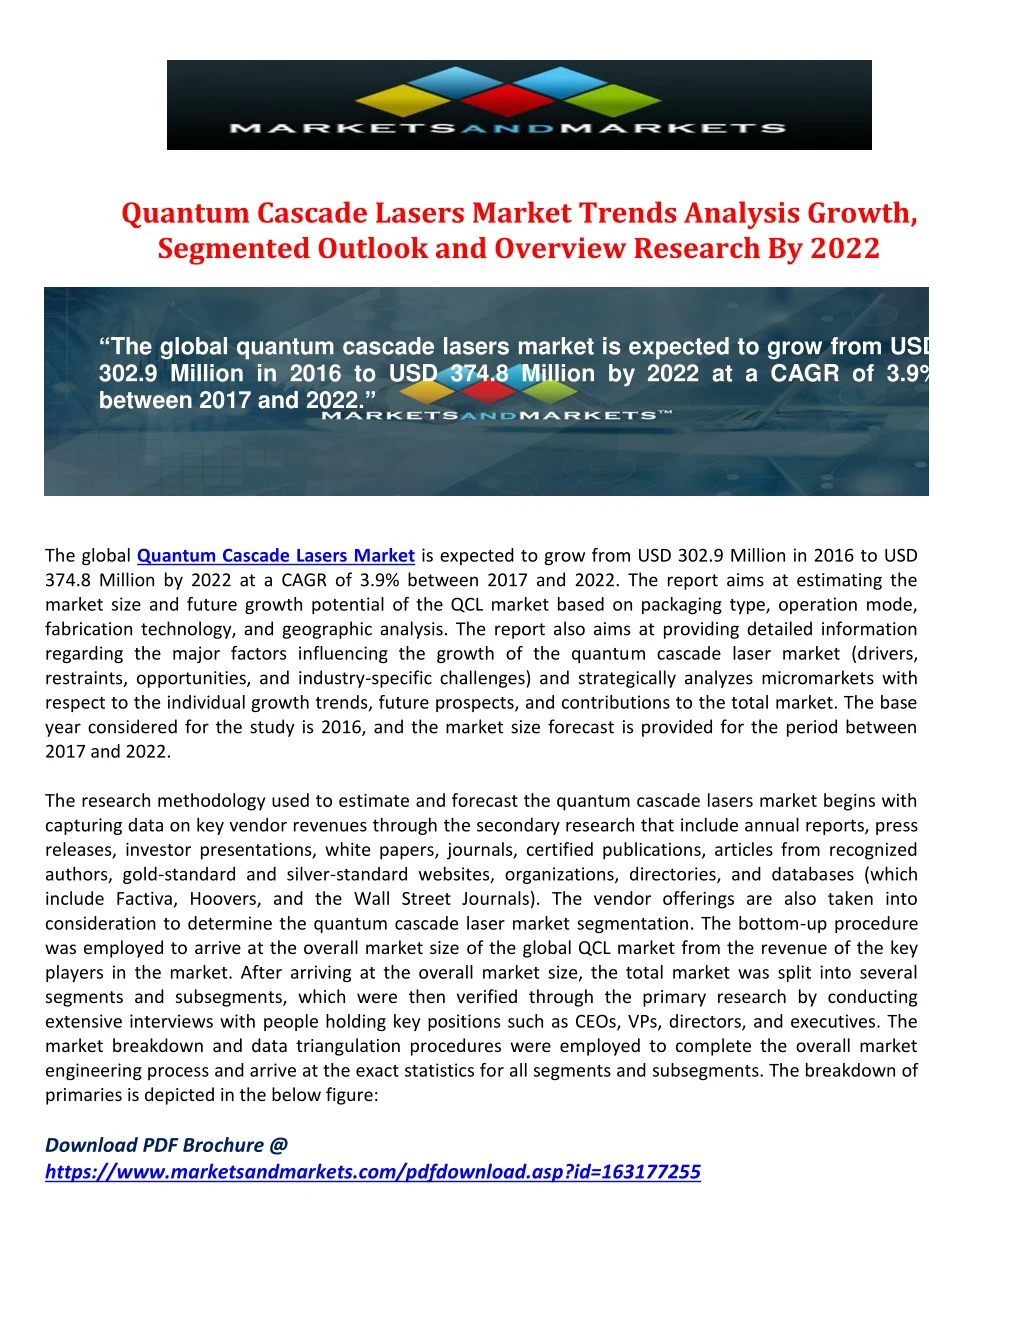 quantum cascade lasers market trends analysis